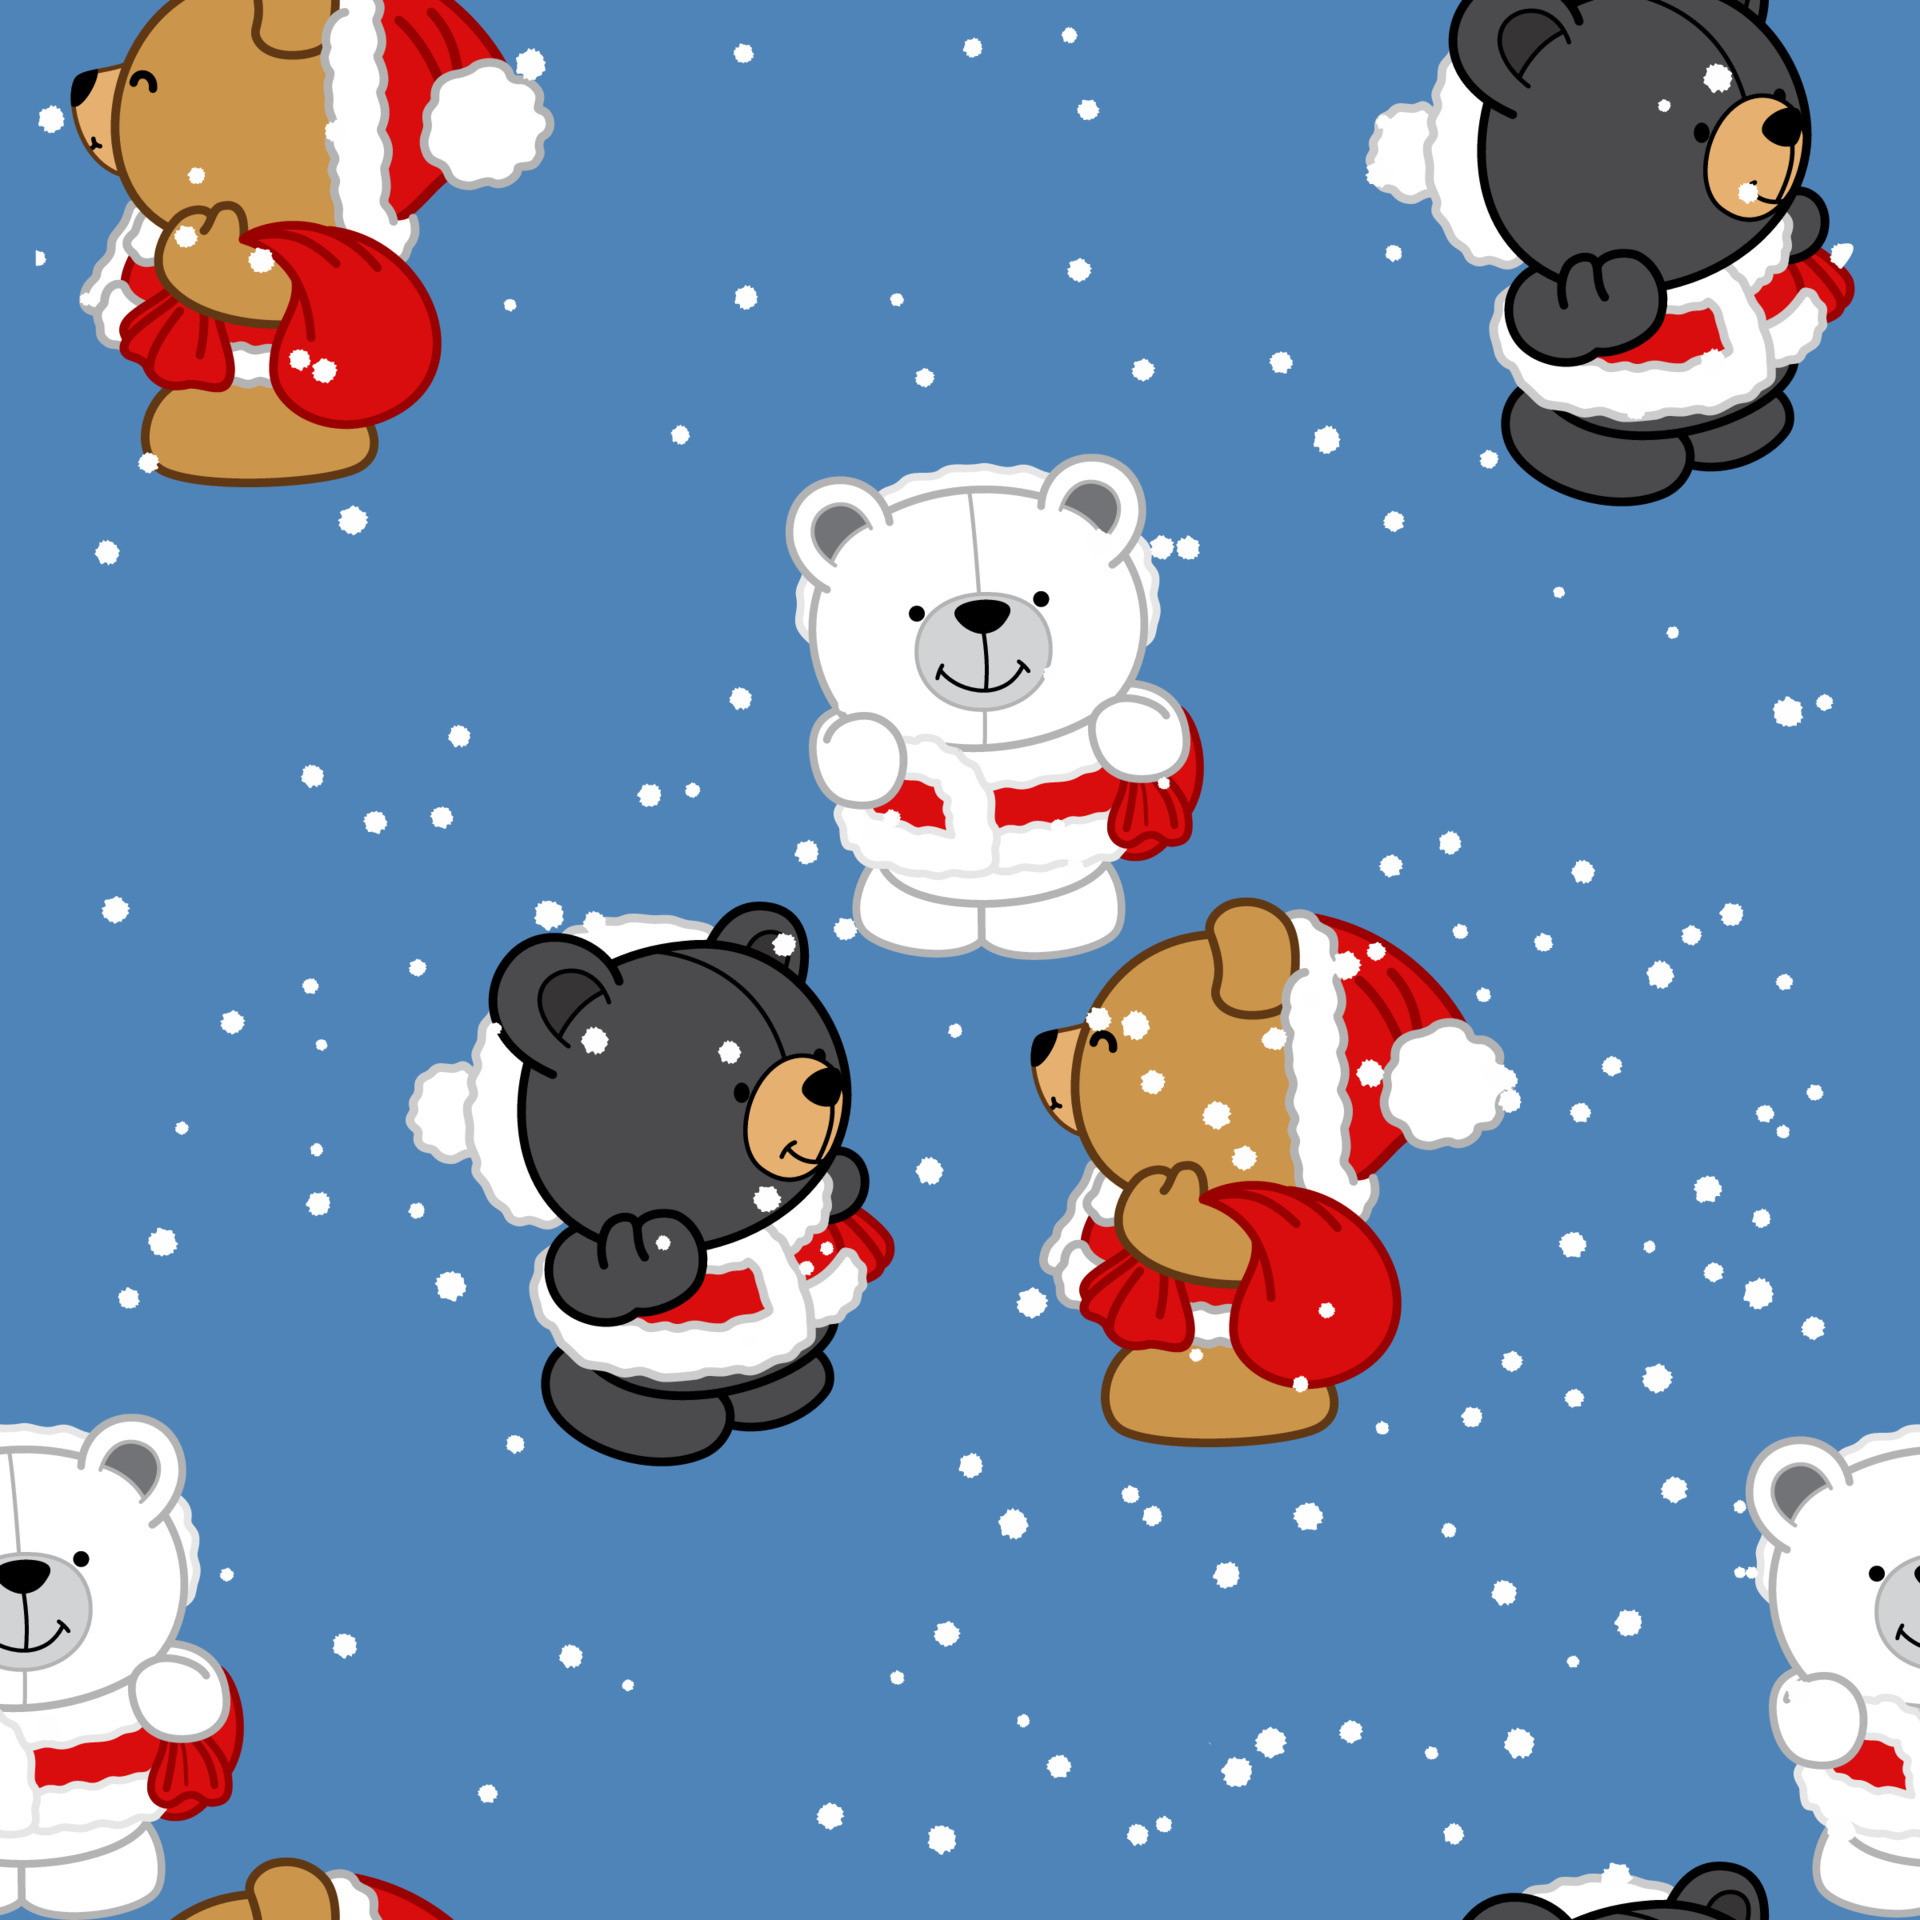 Cute Polar Bear, Black Bear and Teddy Bear in Santa Cross dress for Christmas seamless pattern, Animal cartoon character vector on red background